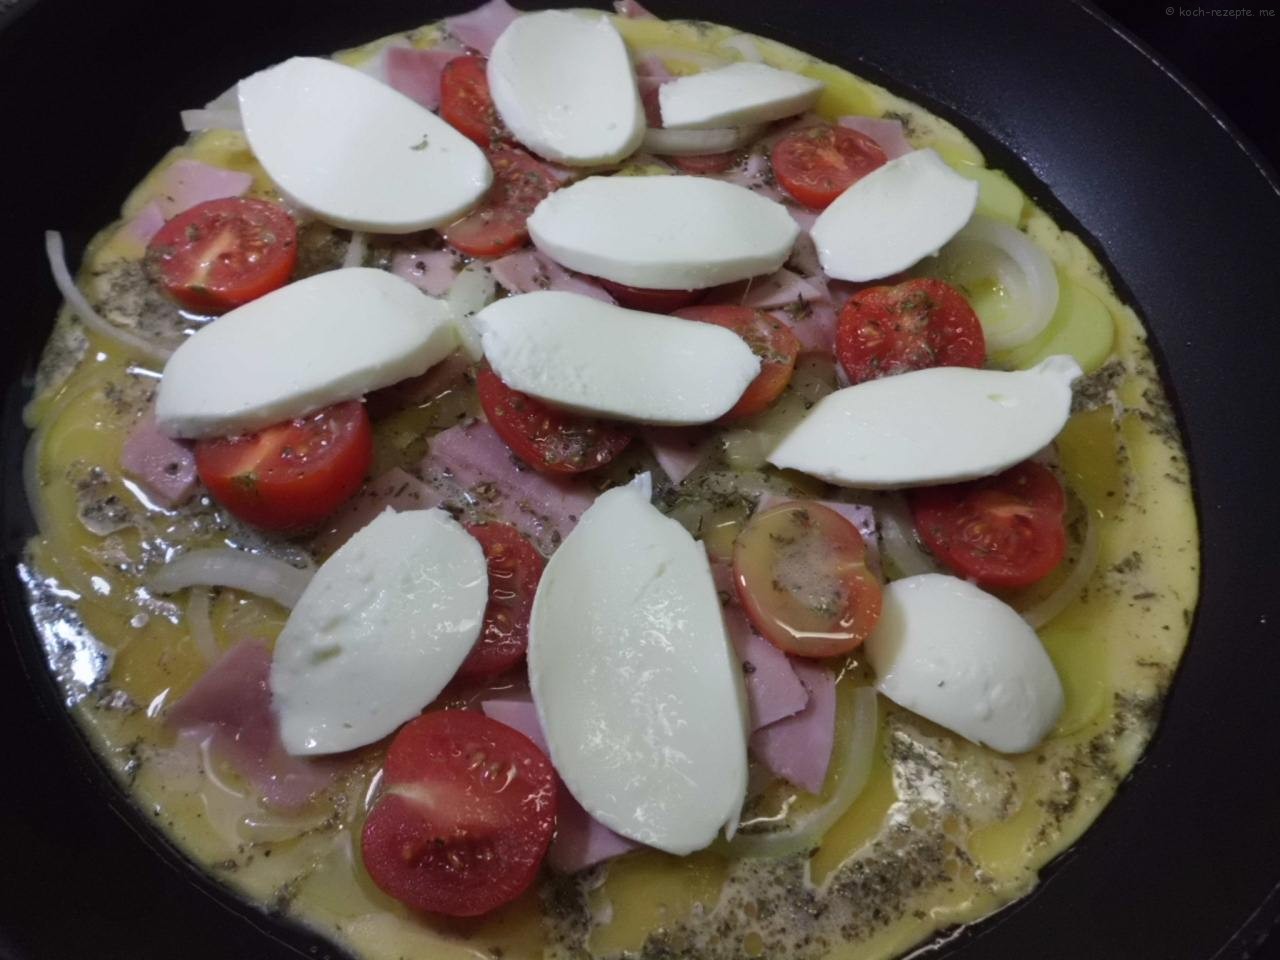 Schnelle Mozzarella Pizza — Rezepte Suchen